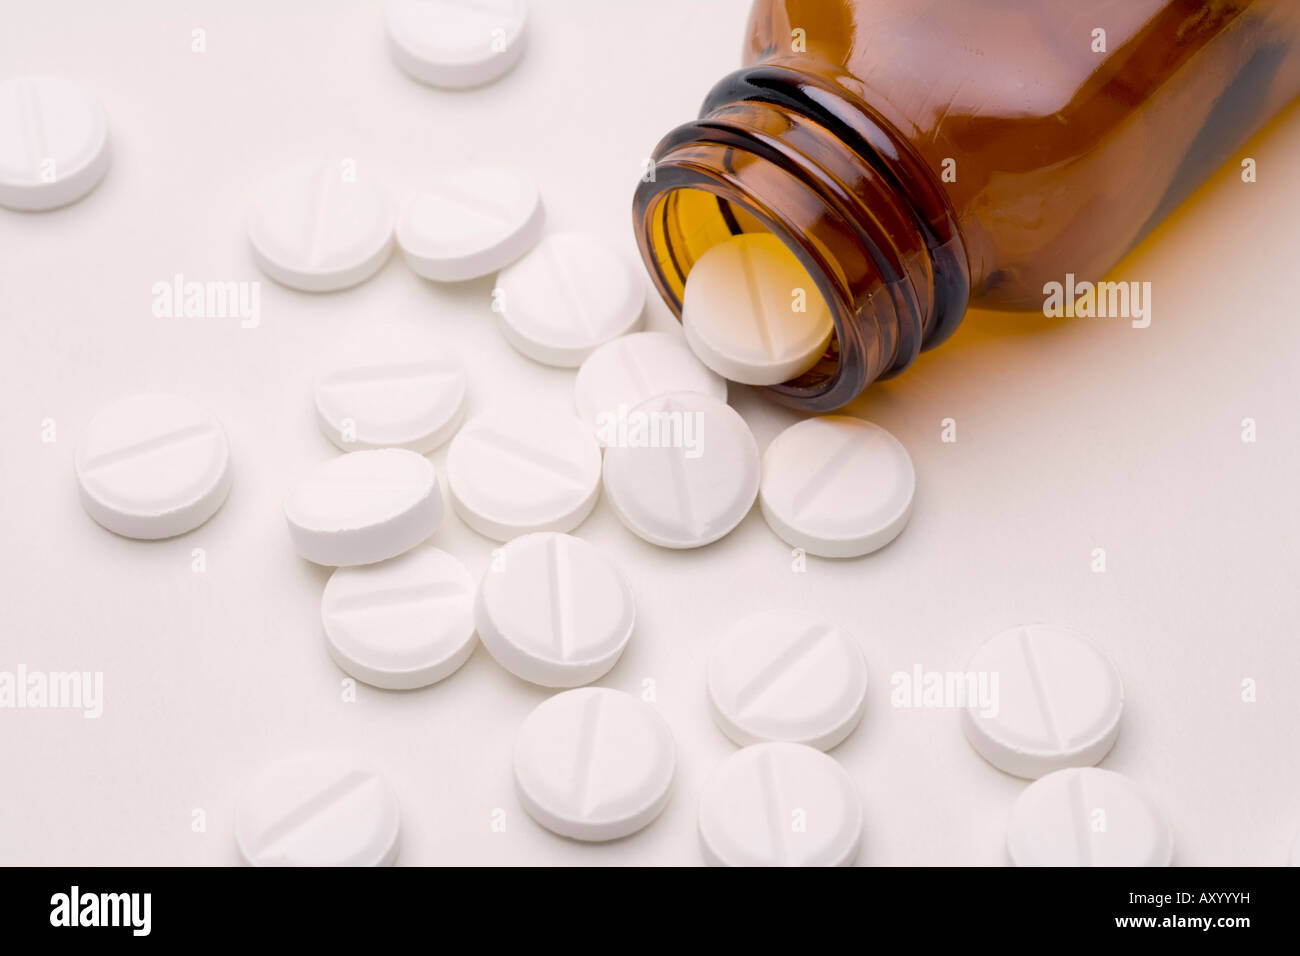 Pills drugs or tablets spilling out of a brown glass medicine bottle aspirin or paracetamol Stock Photo